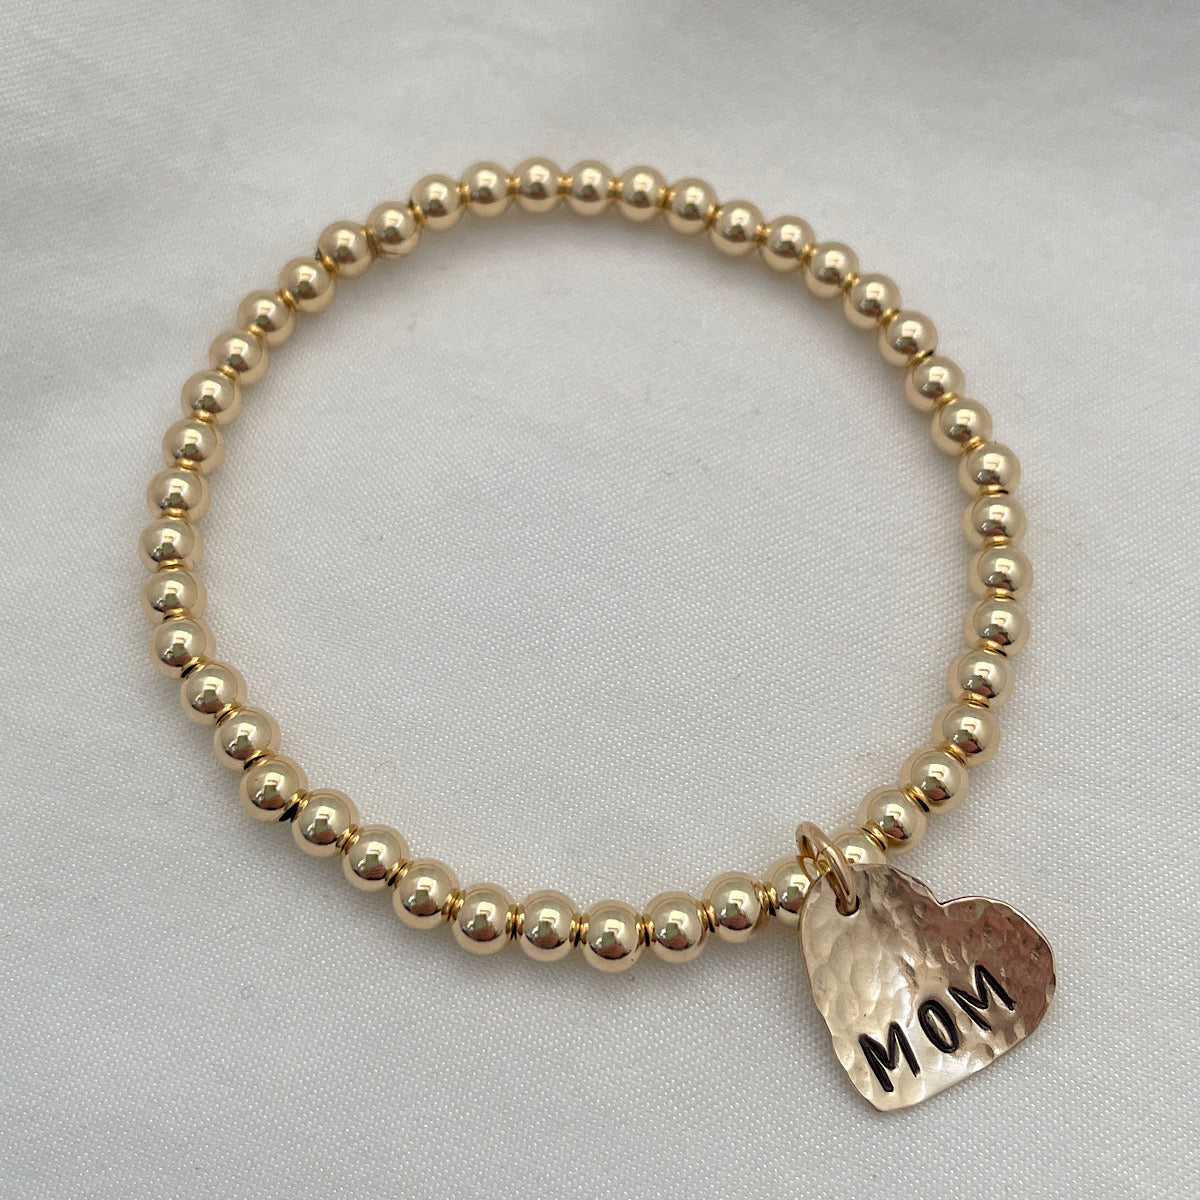 Heart Personalized Charm Bead Bracelet Gold Fill